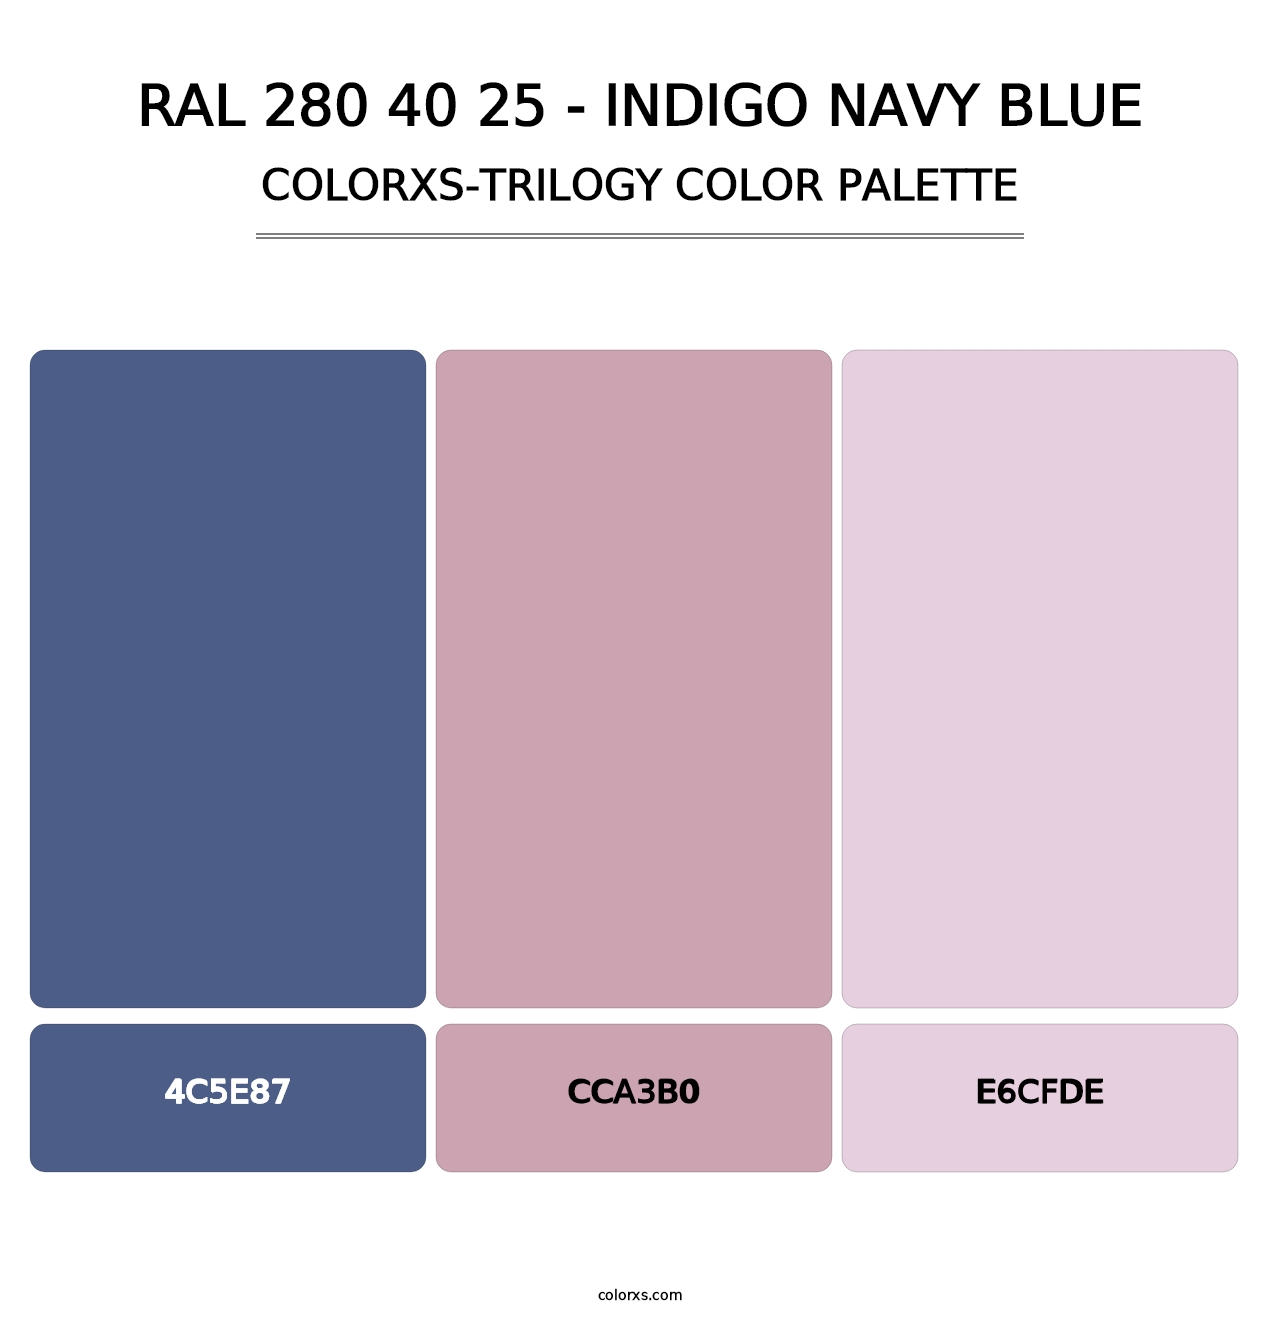 RAL 280 40 25 - Indigo Navy Blue - Colorxs Trilogy Palette